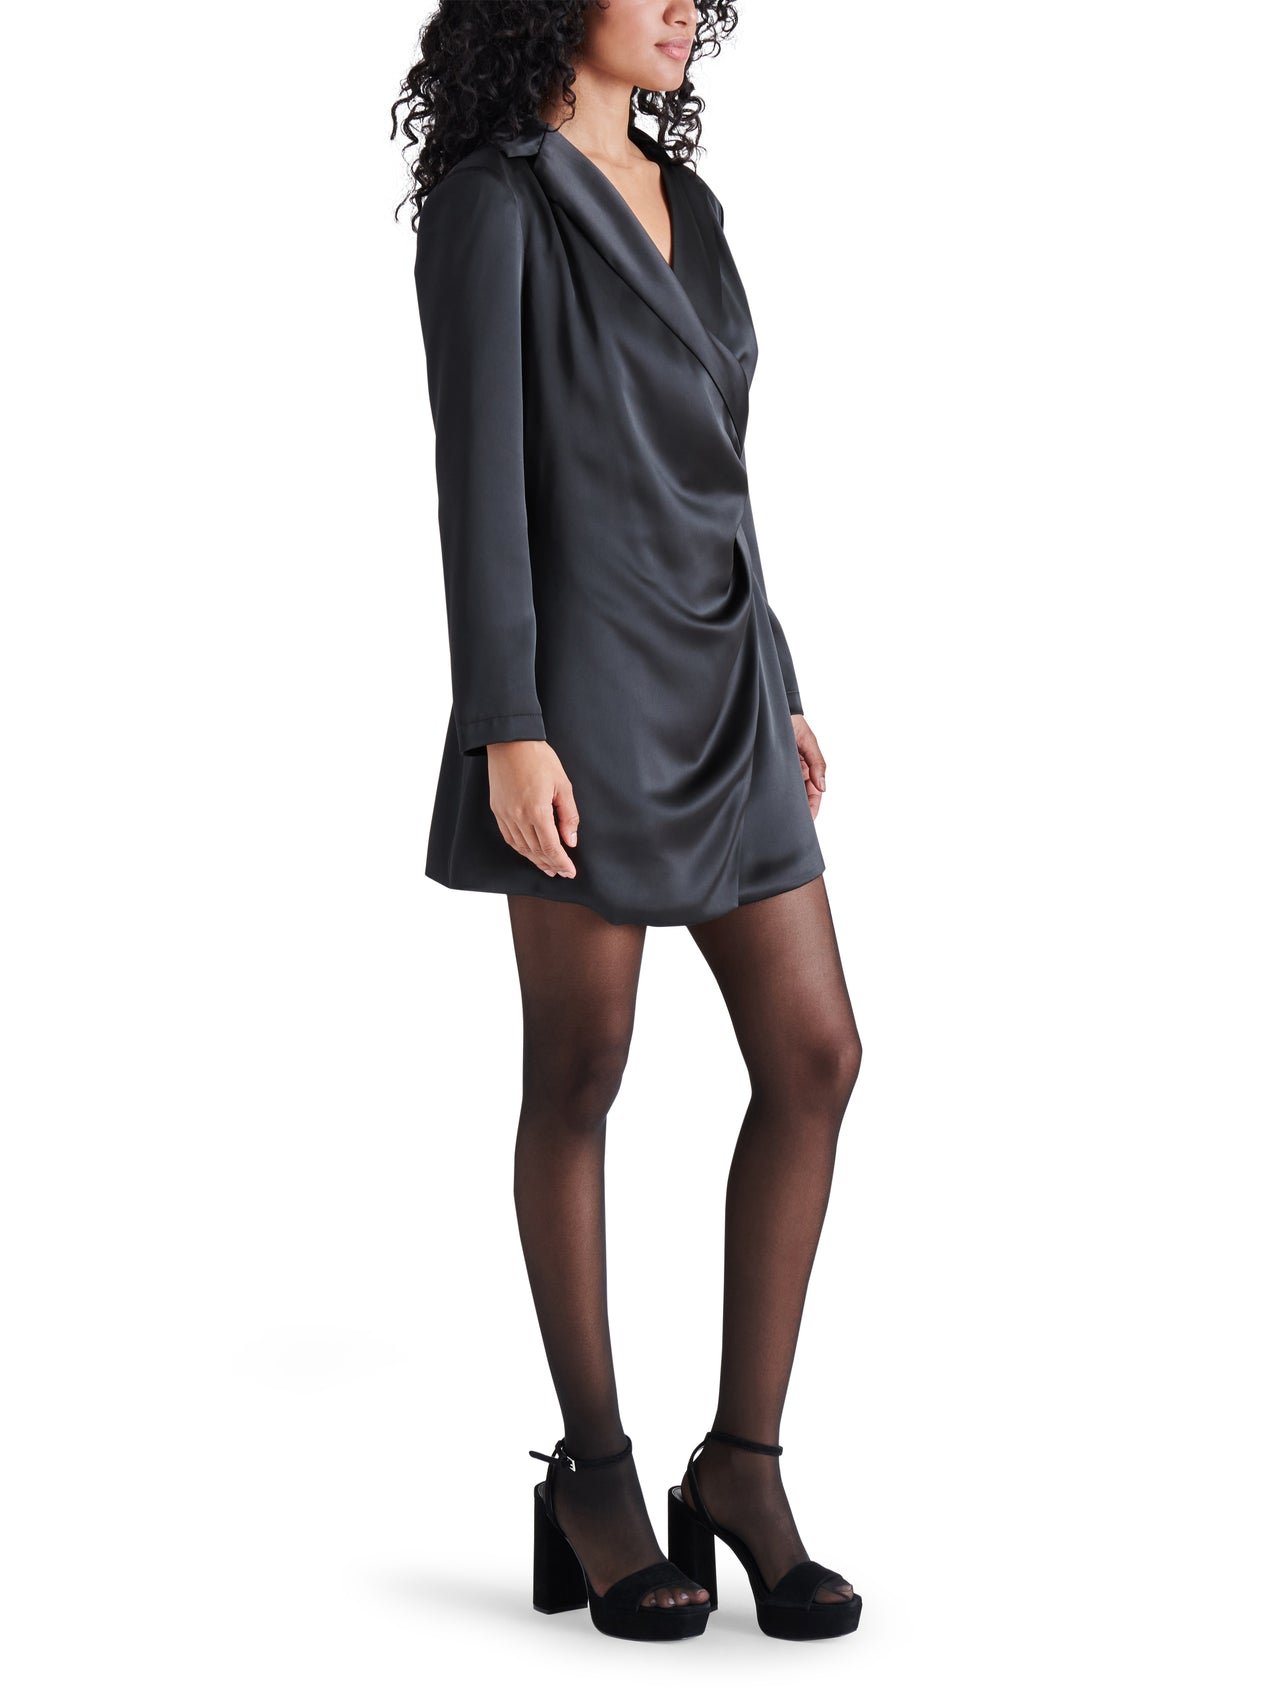 Jasper Black Satin Wrap Front Blazer Dress, Mini Dress by Steve Madden | LIT Boutique